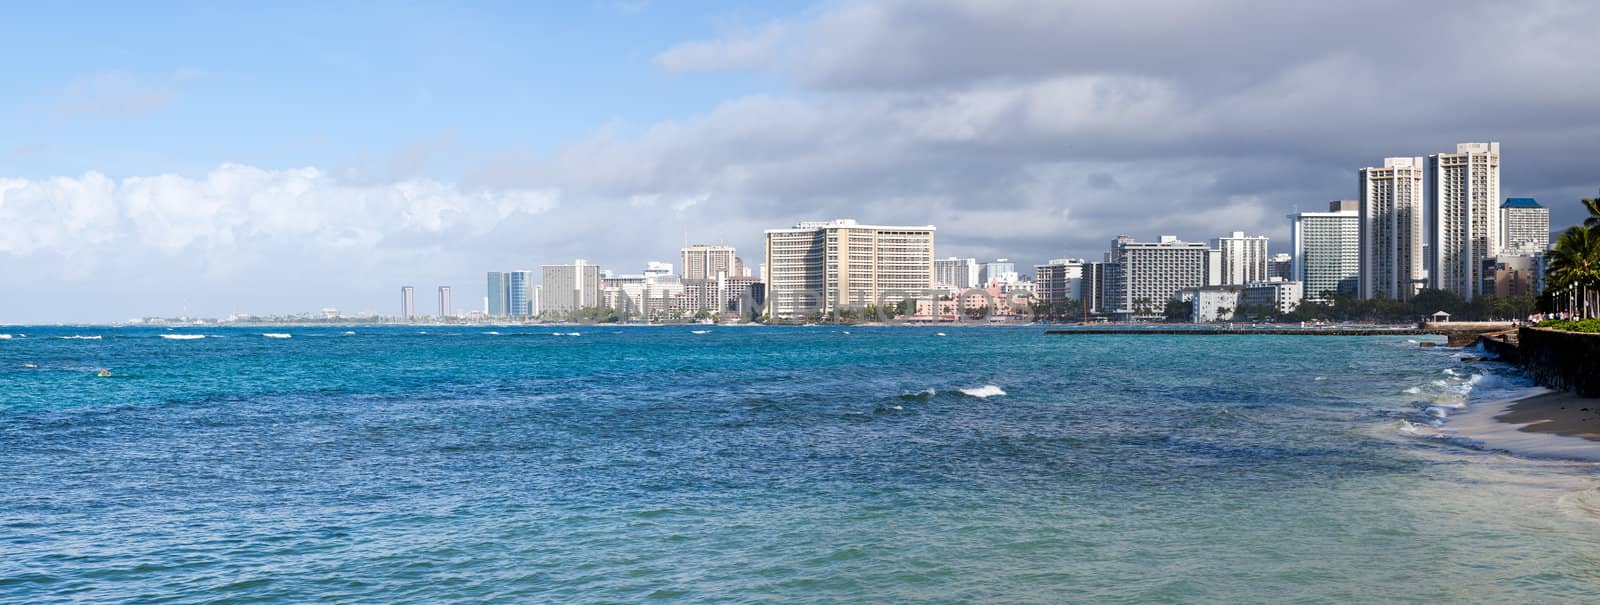 Panorama of sea front at Waikiki by steheap